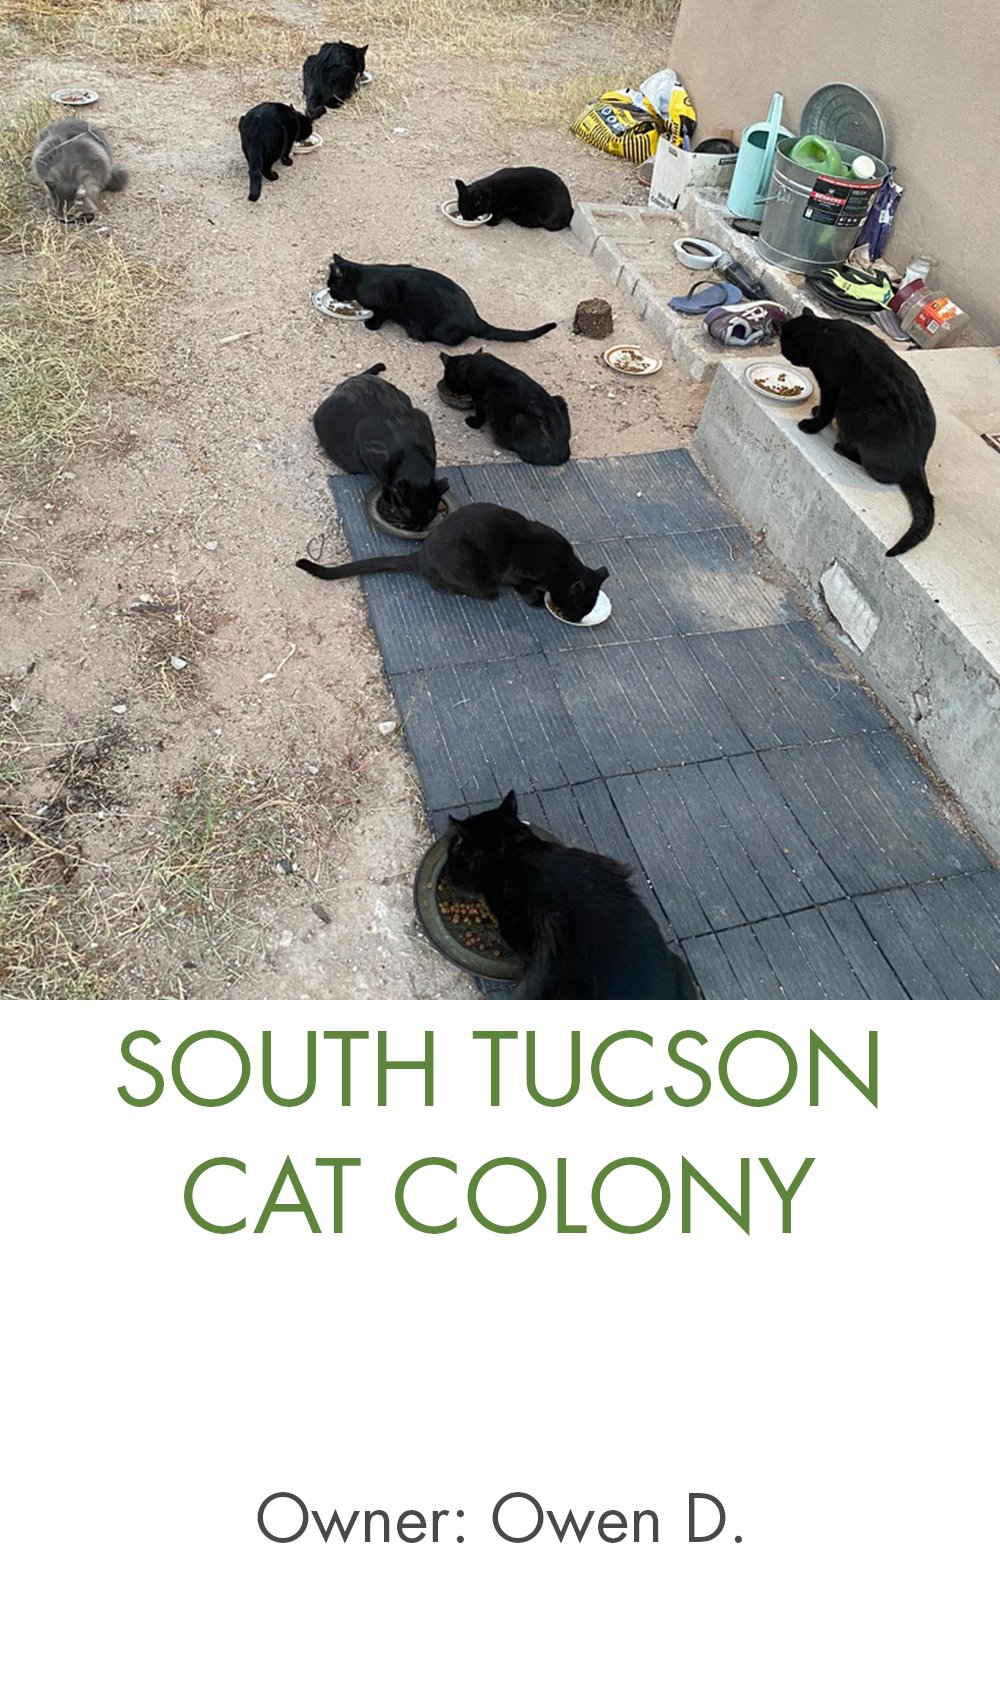 South Tucson Cat Colony.jpg